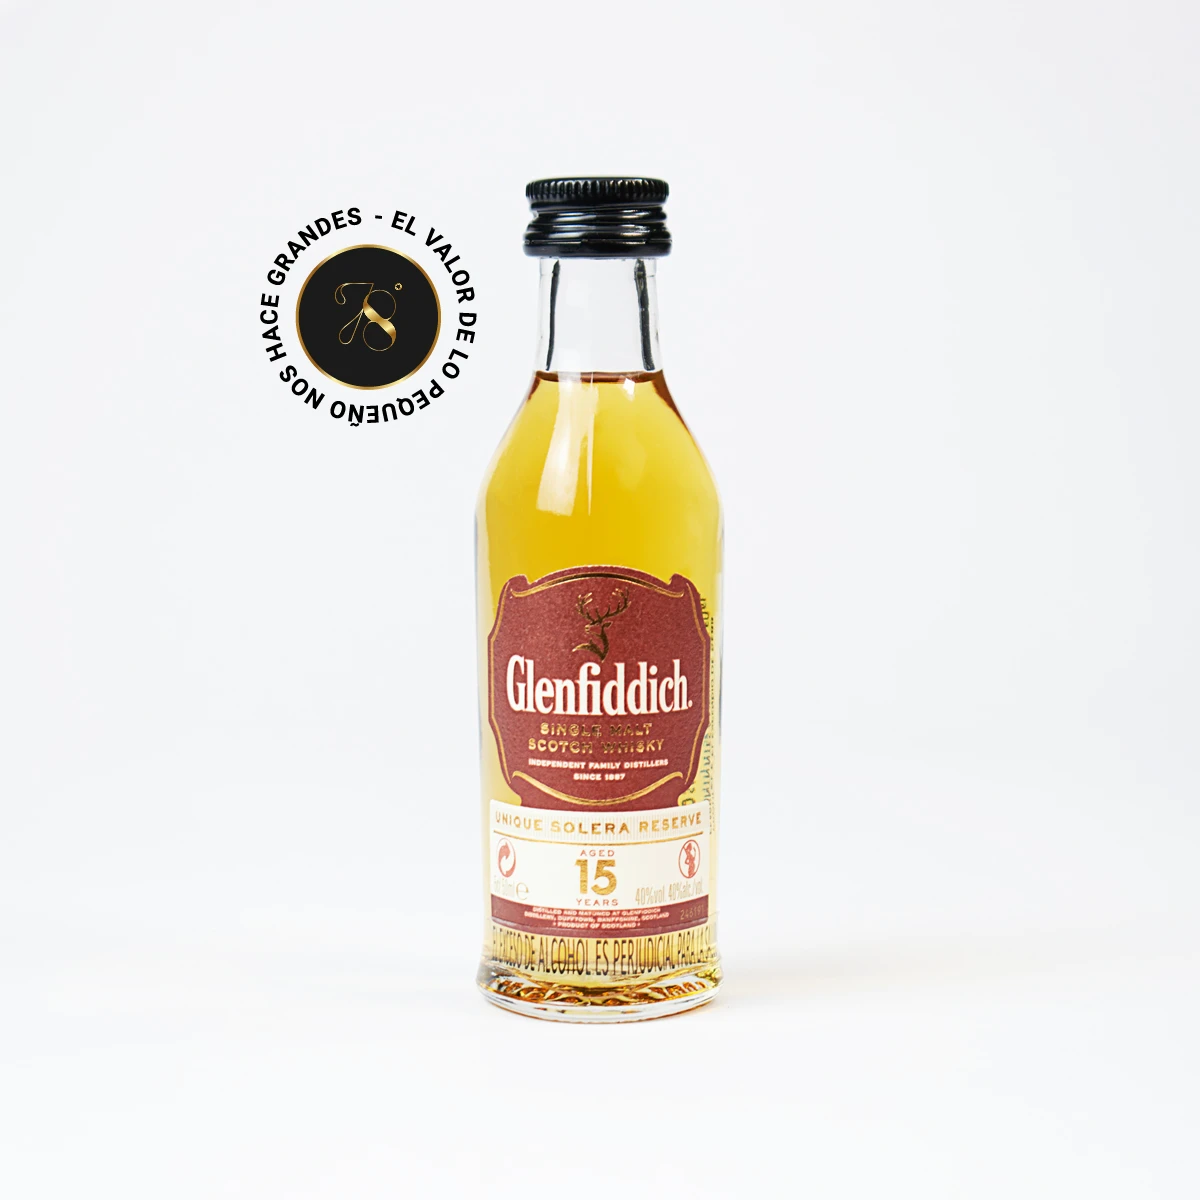 MB12 - Mini Botella - Botellita de licor de Whisky Glenfiddich 15 años más caja de regalo premium e invitación o fotografía personalizada. Ideal para eventos, recuerdos, bodas o regalos corporativos.